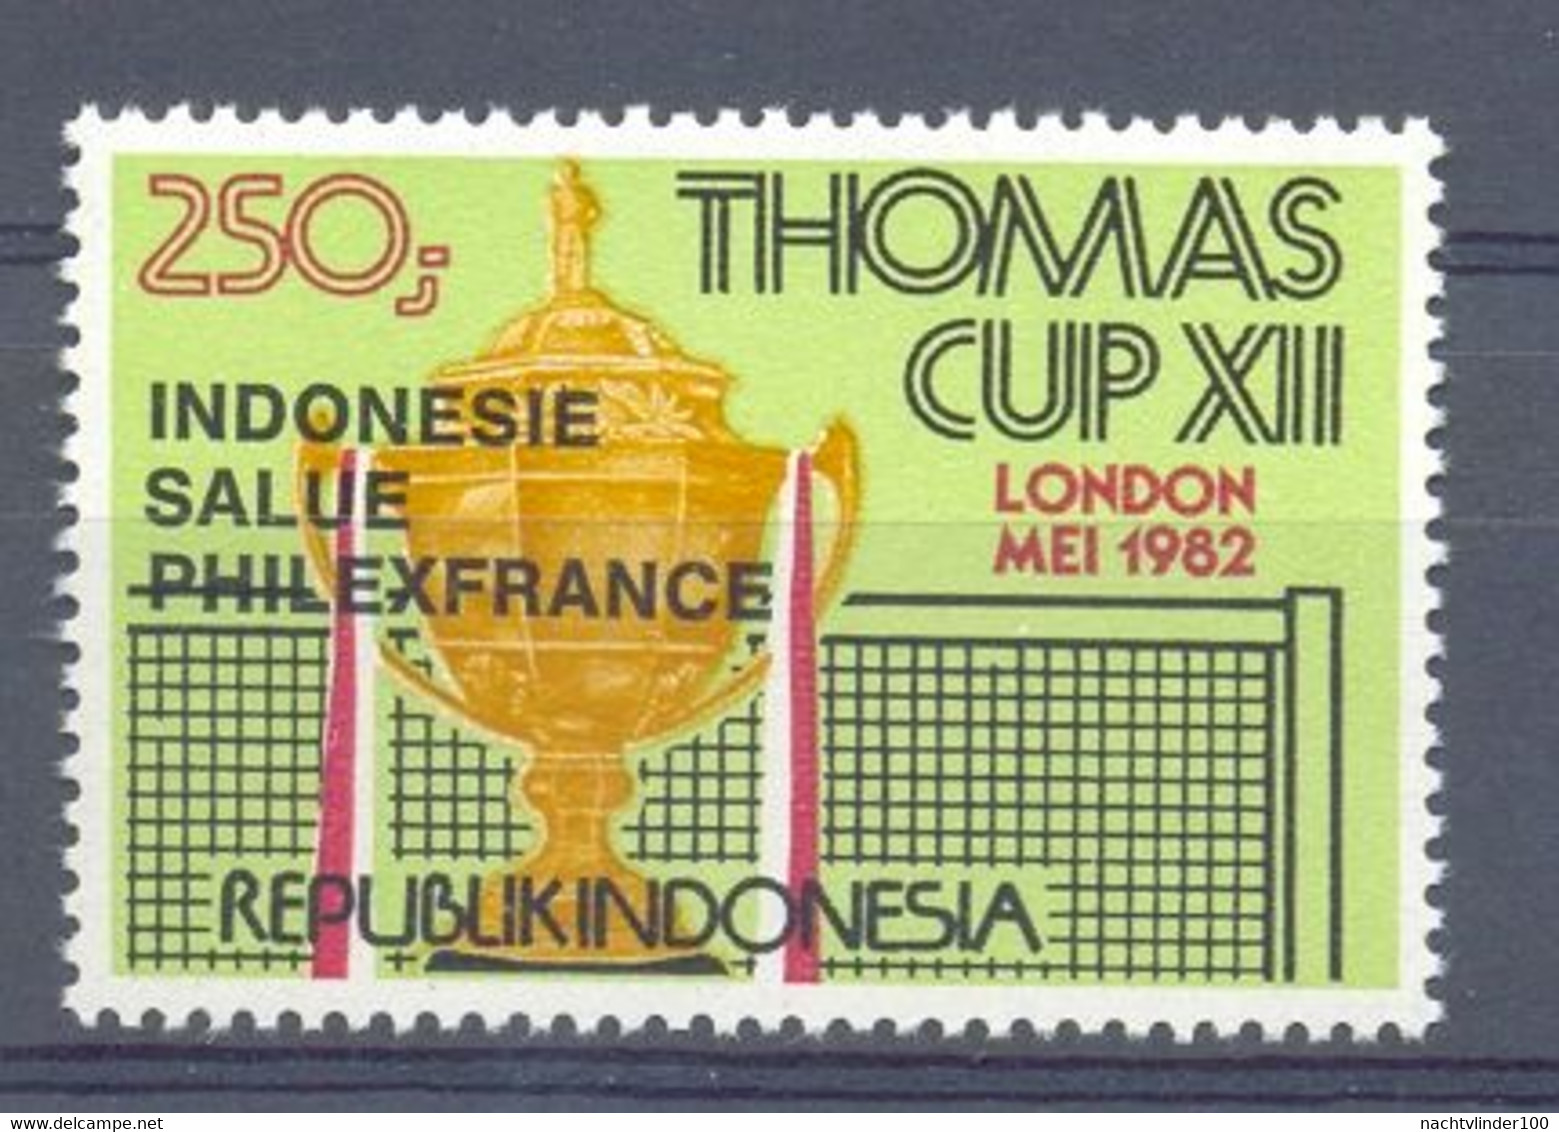 Mgm1114 THOMAS CUP BADMINTON OVERPRINT BLACK INDONESIA 1982 PF/MNH - Badminton